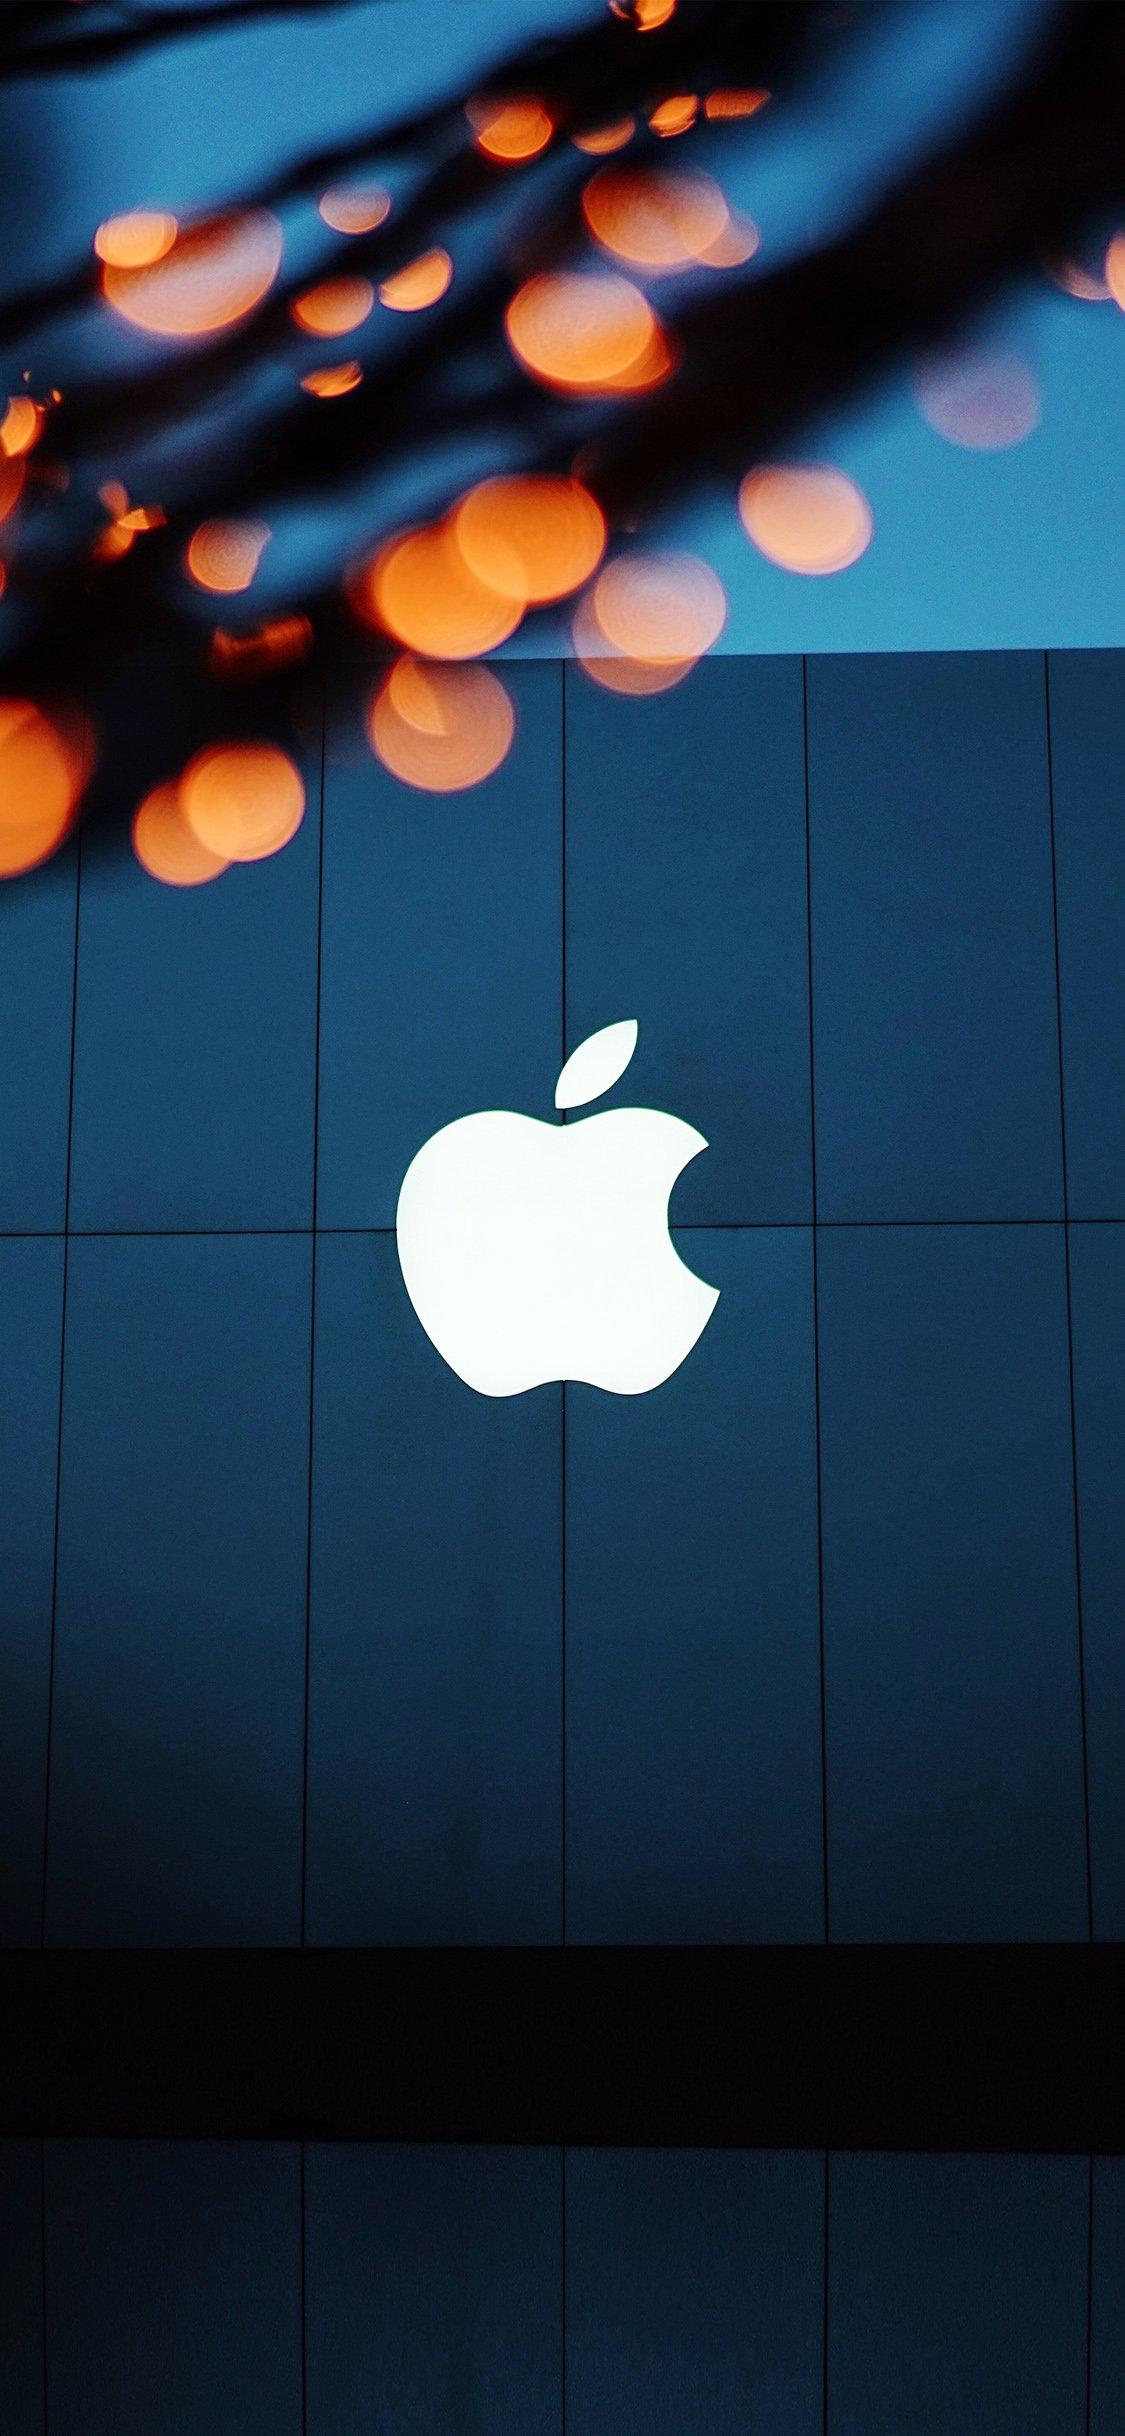 iPhone X wallpaper. apple logo blue